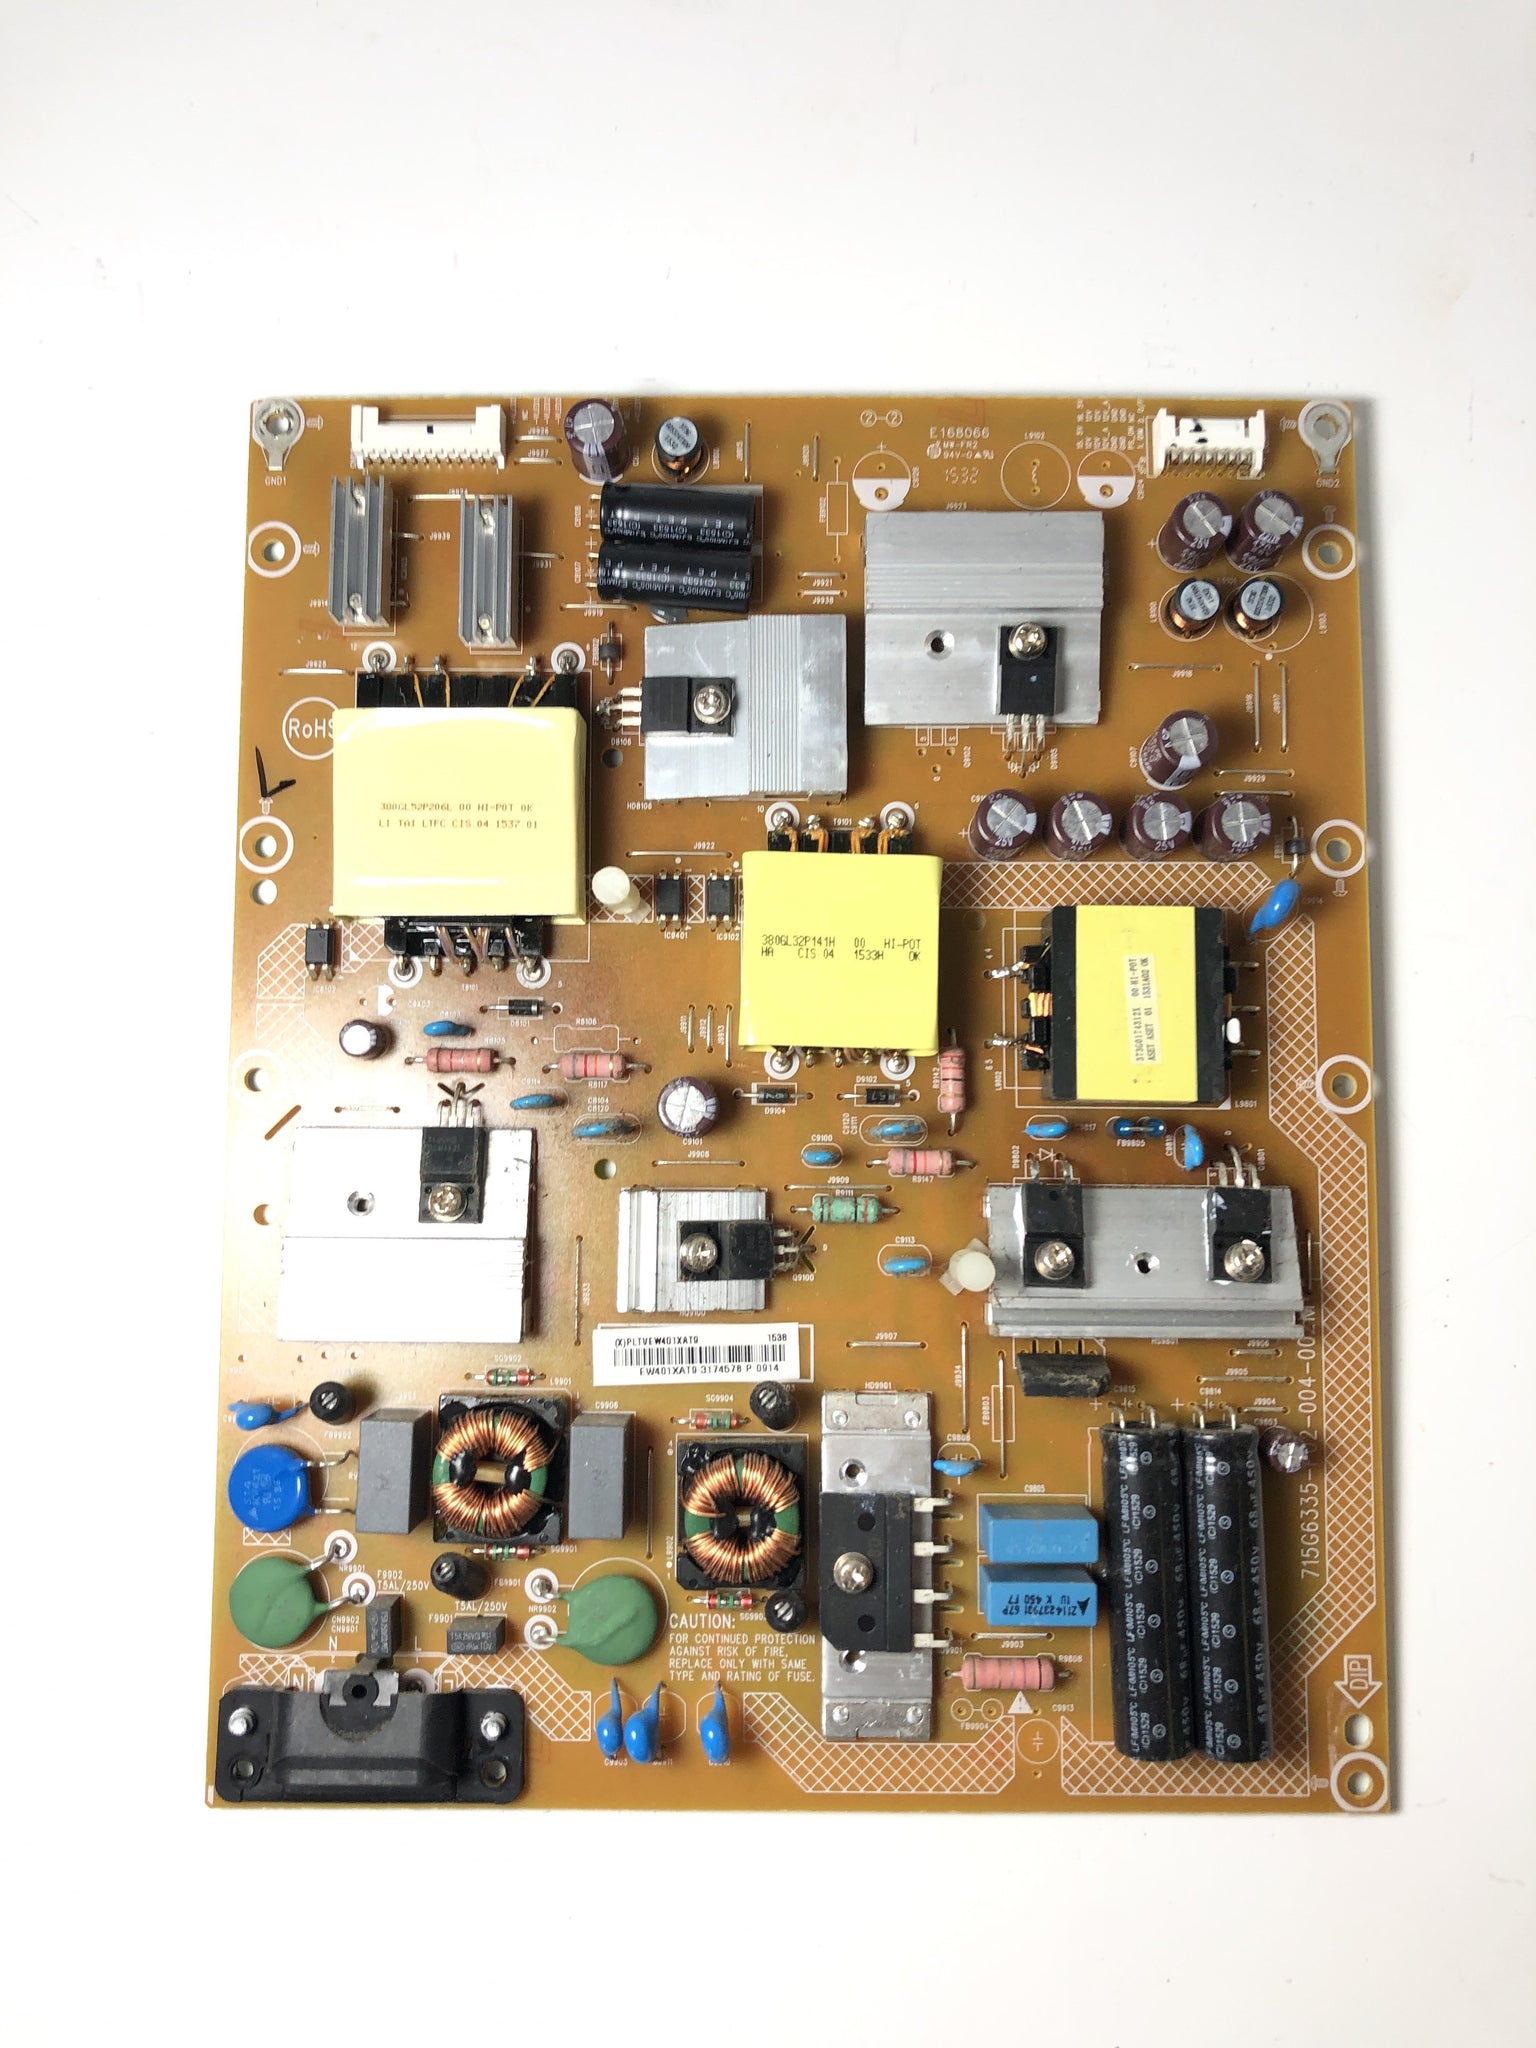 LG PLTVEW401XAT9 Power Supply Board